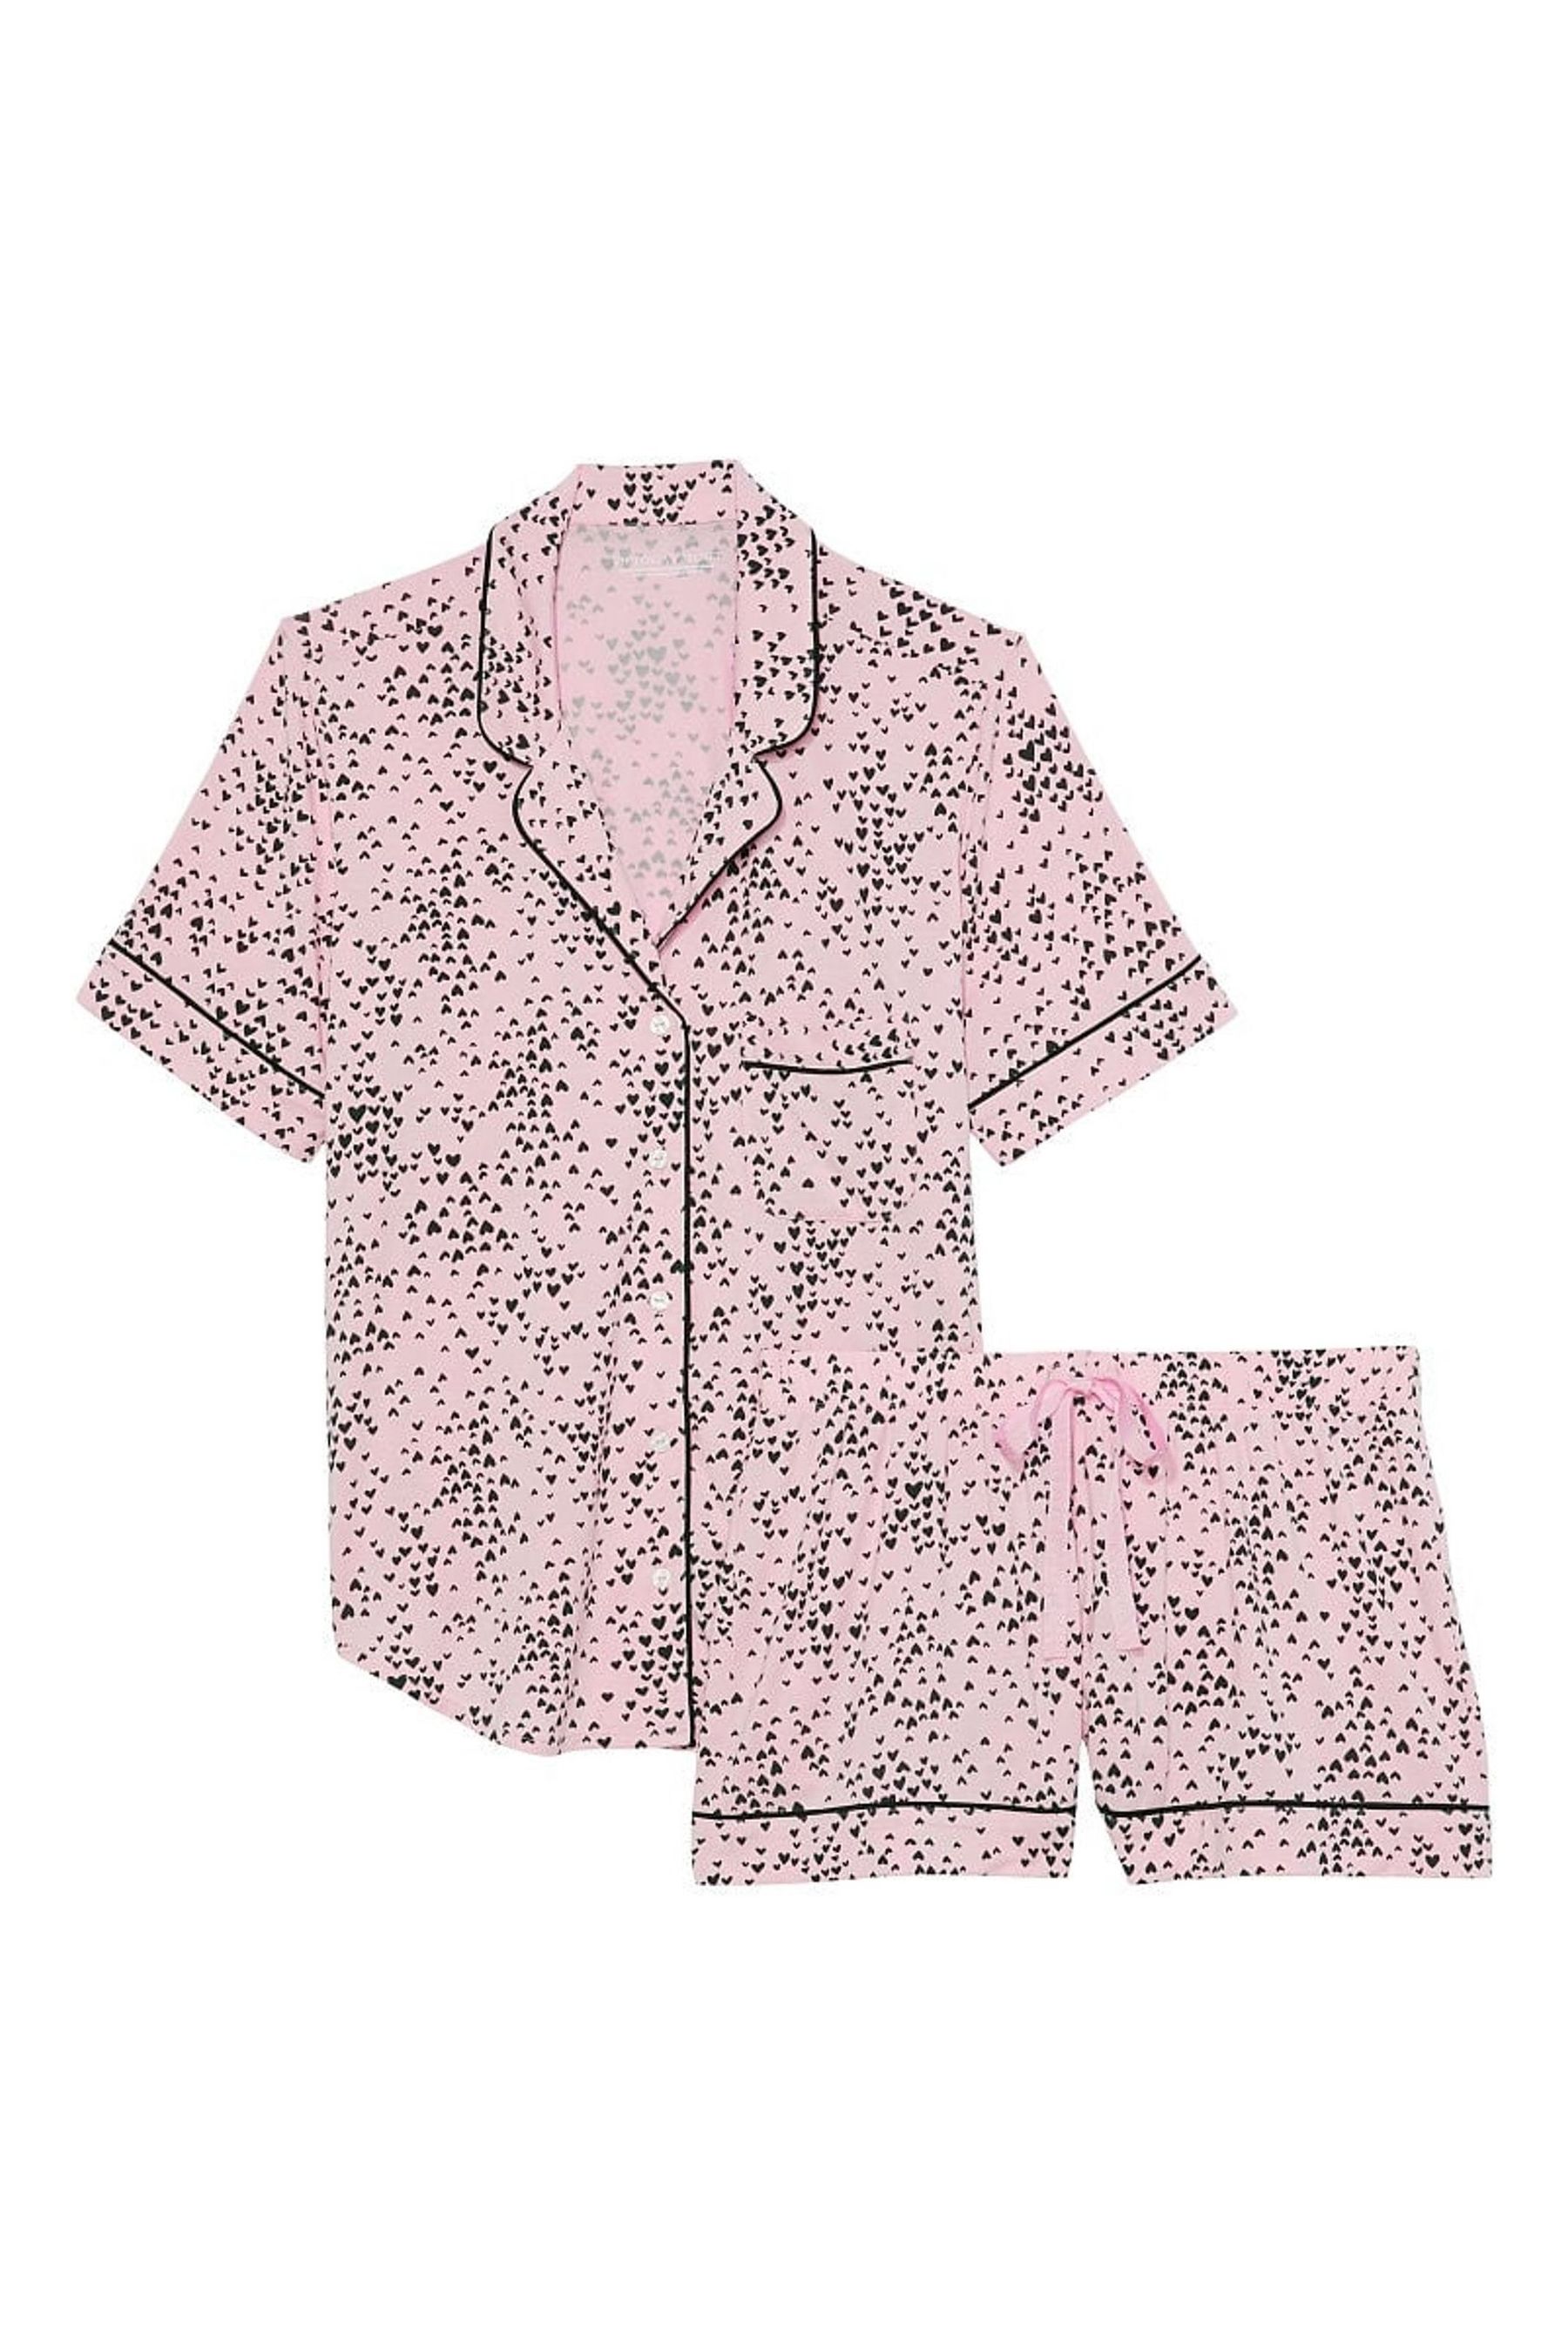 Buy Victoria's Secret Modal Short Pyjama Set from the Victoria's Secret ...